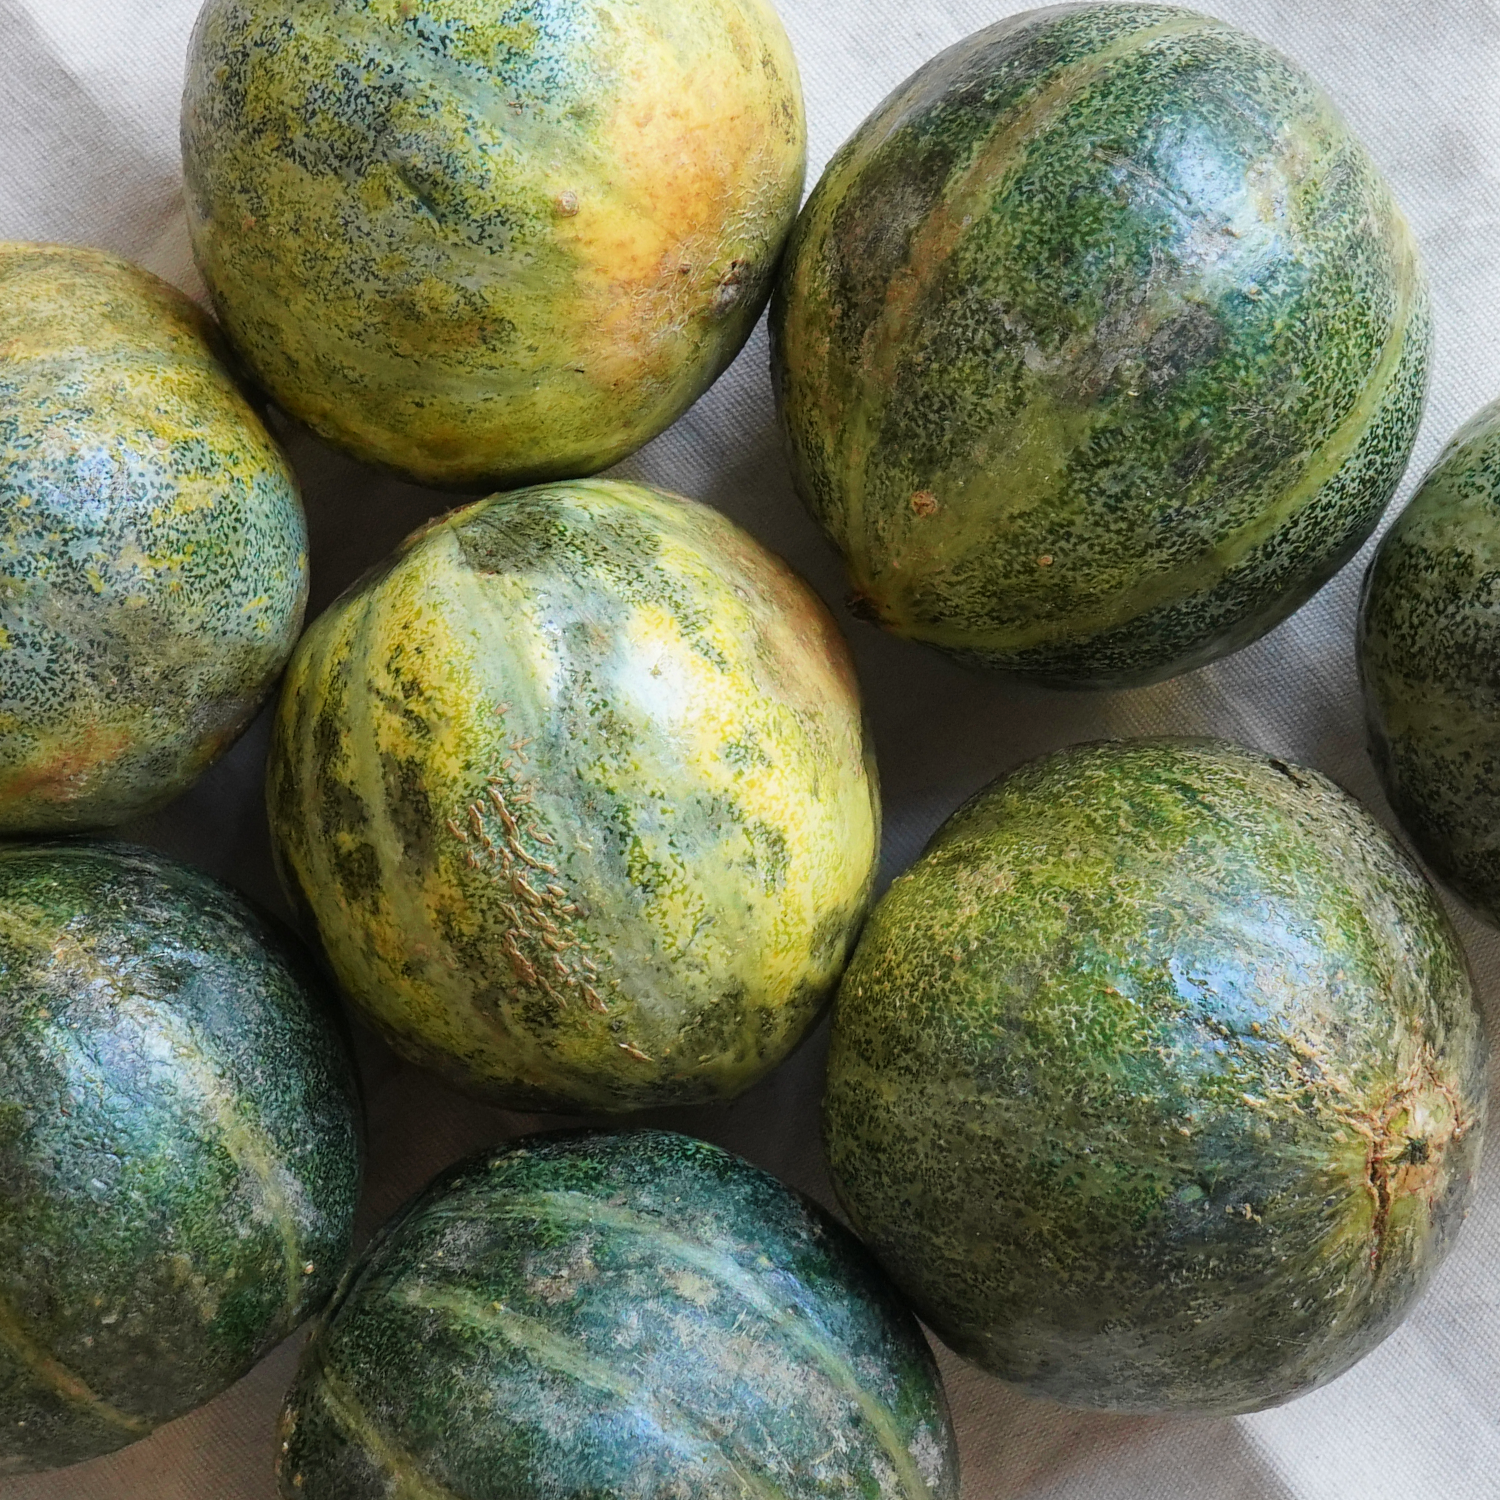 Varios melones Cantaloupe